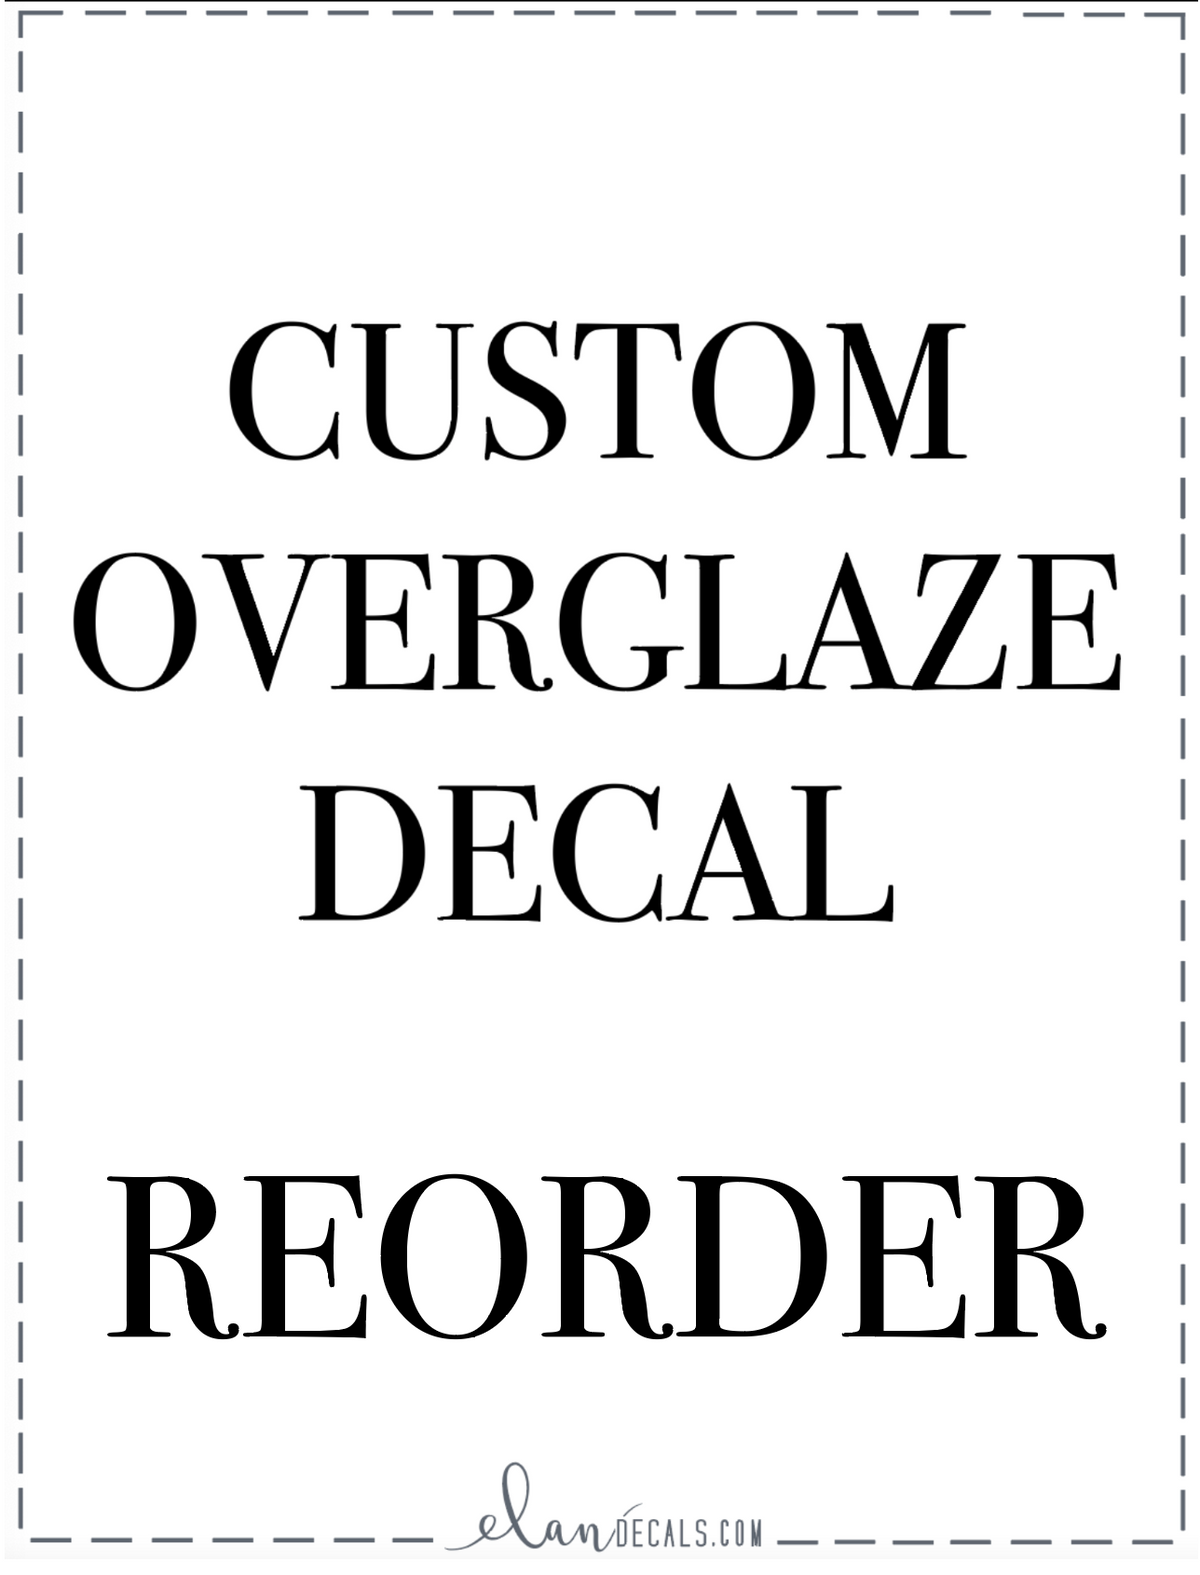 Custom Overglaze Decal Sheet - Reorder of Previous Design